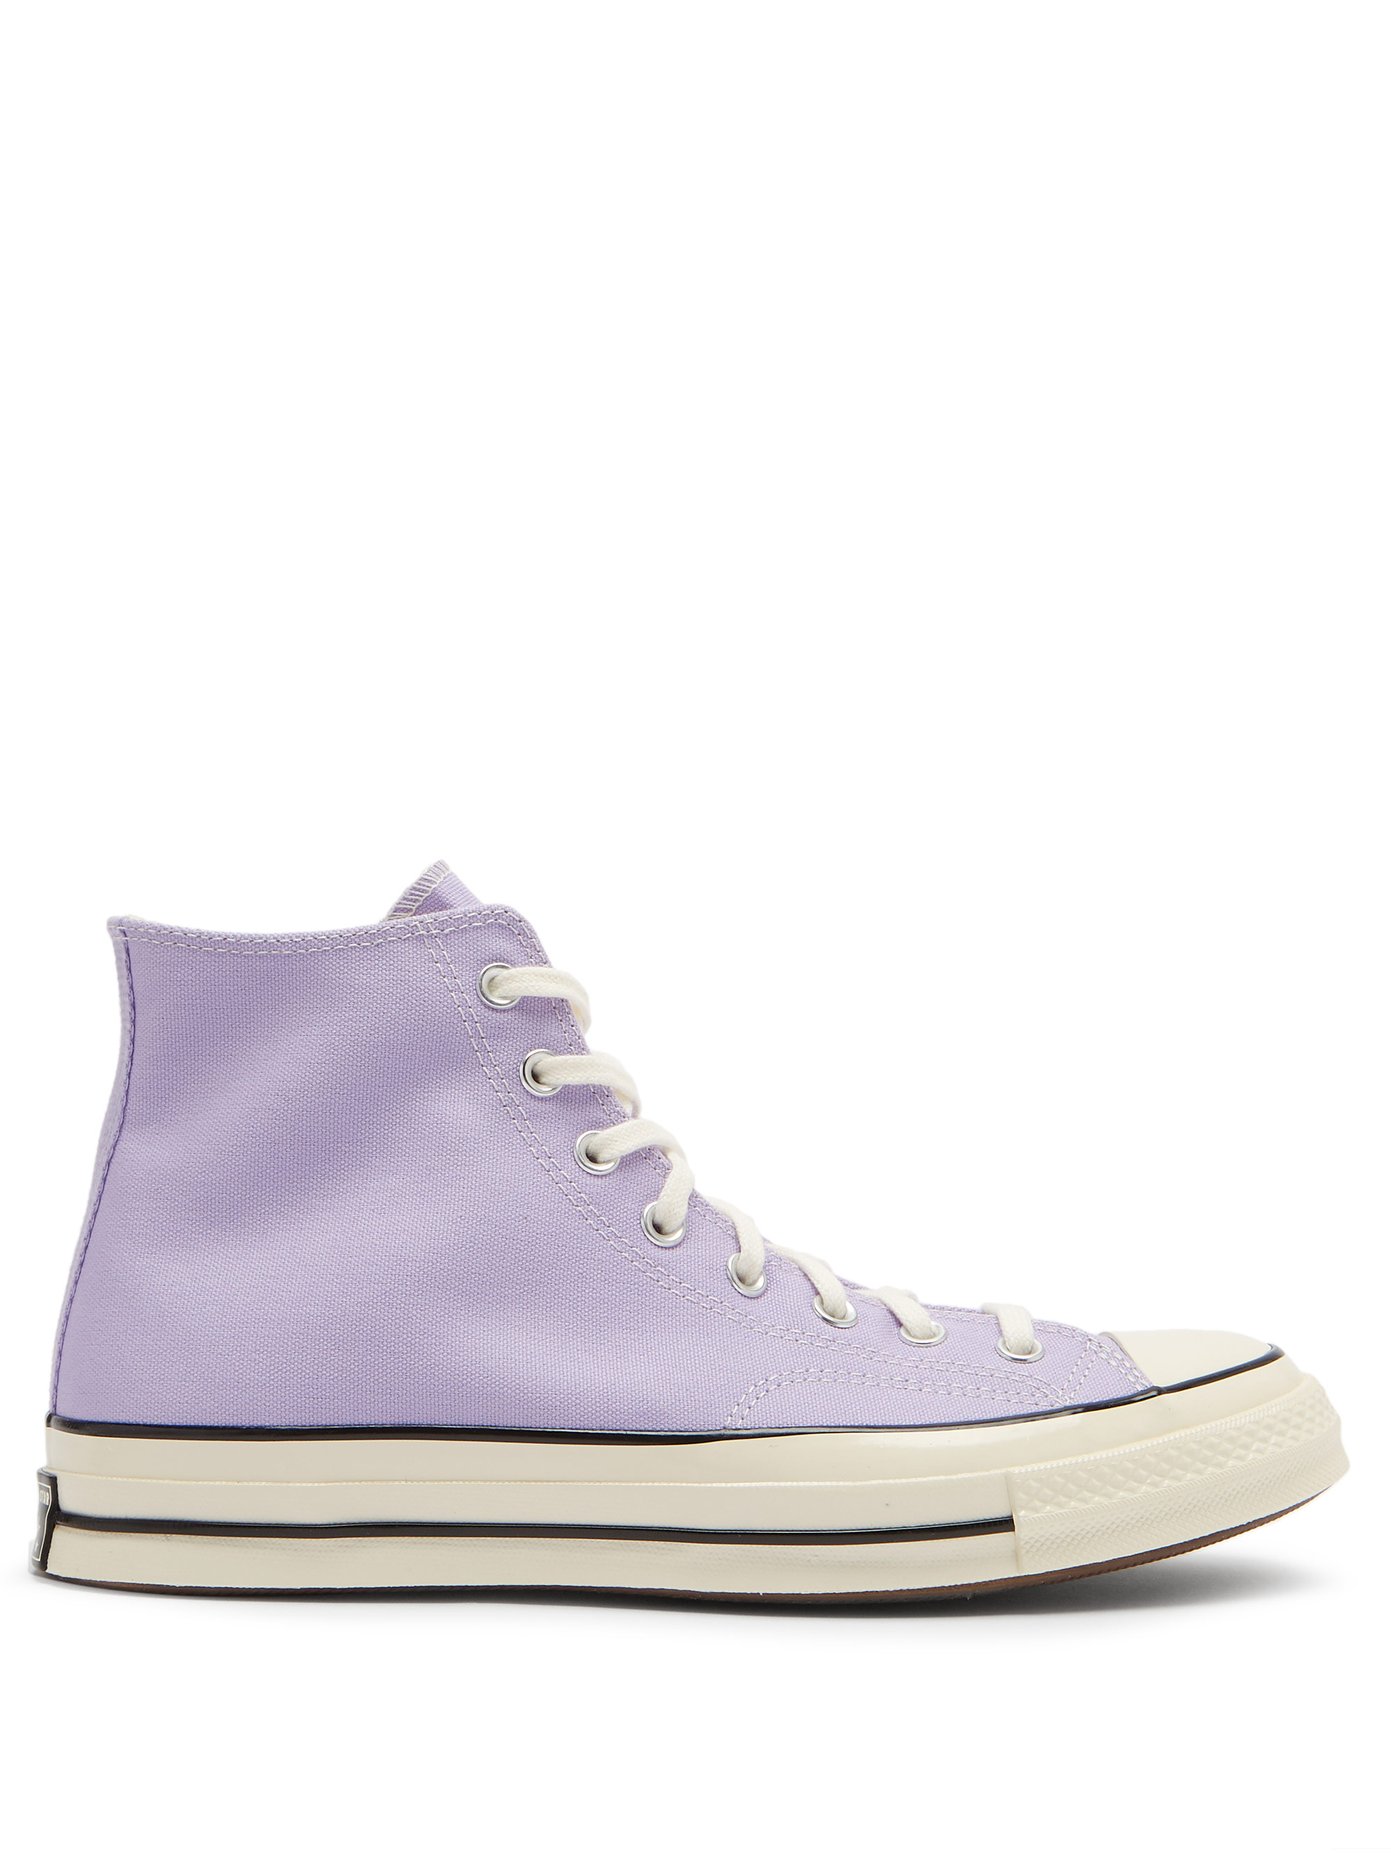 converse lavender high tops